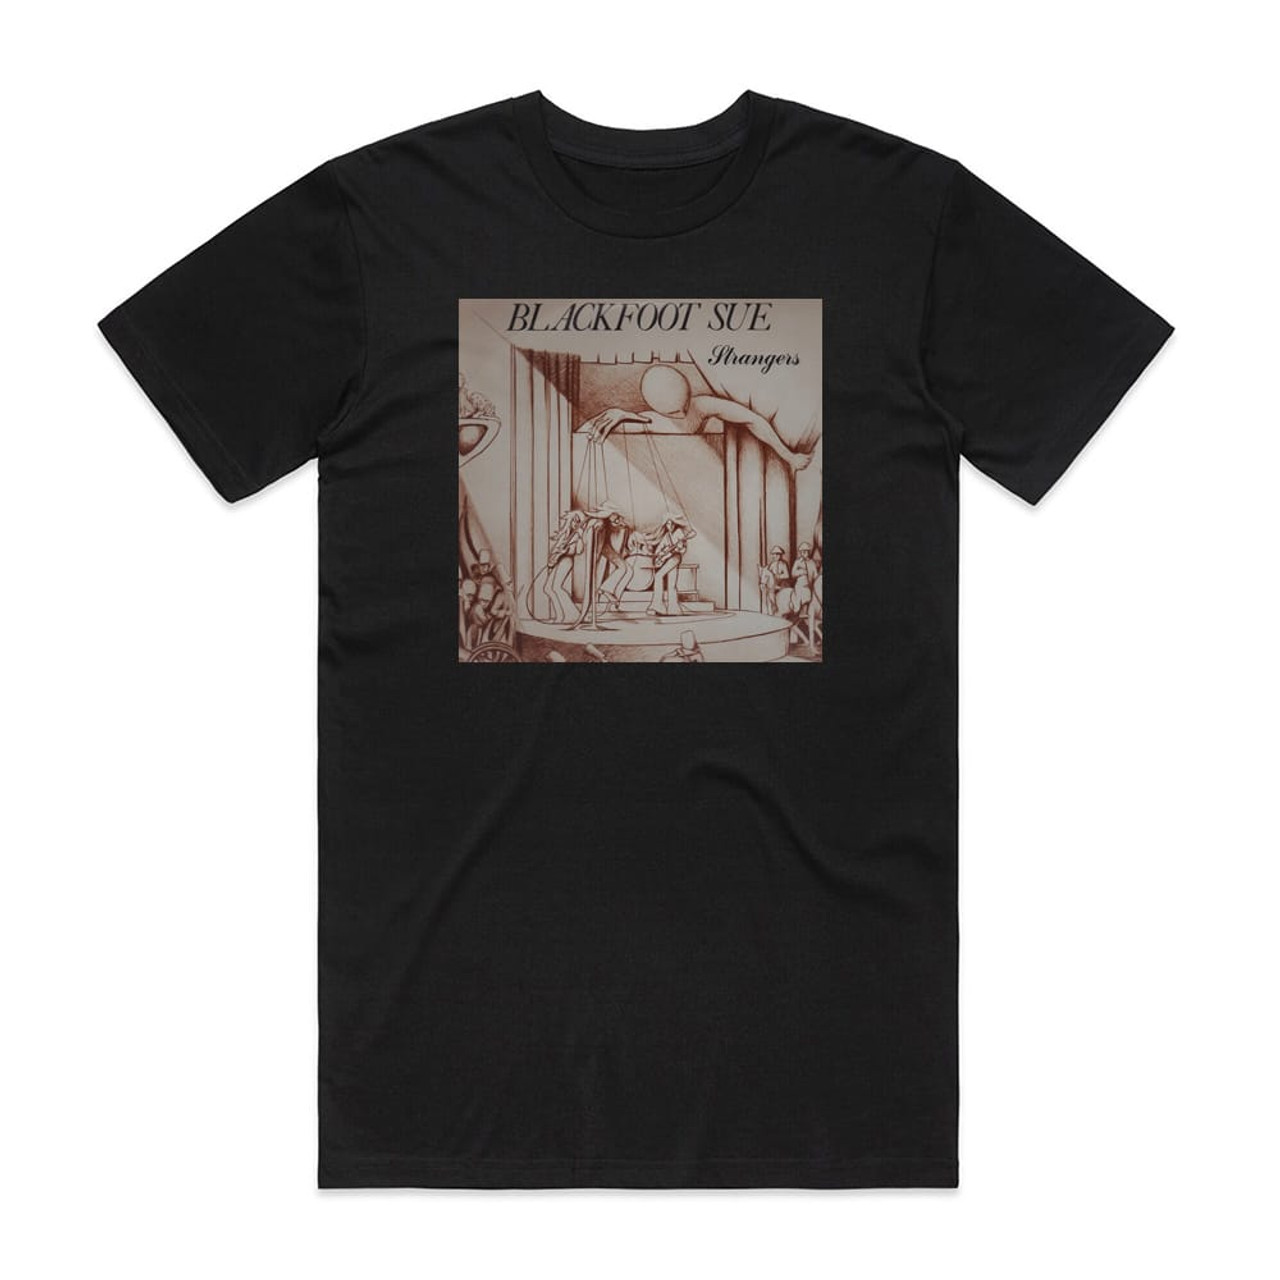 Blackfoot Sue Strangers Album Cover T-Shirt Black